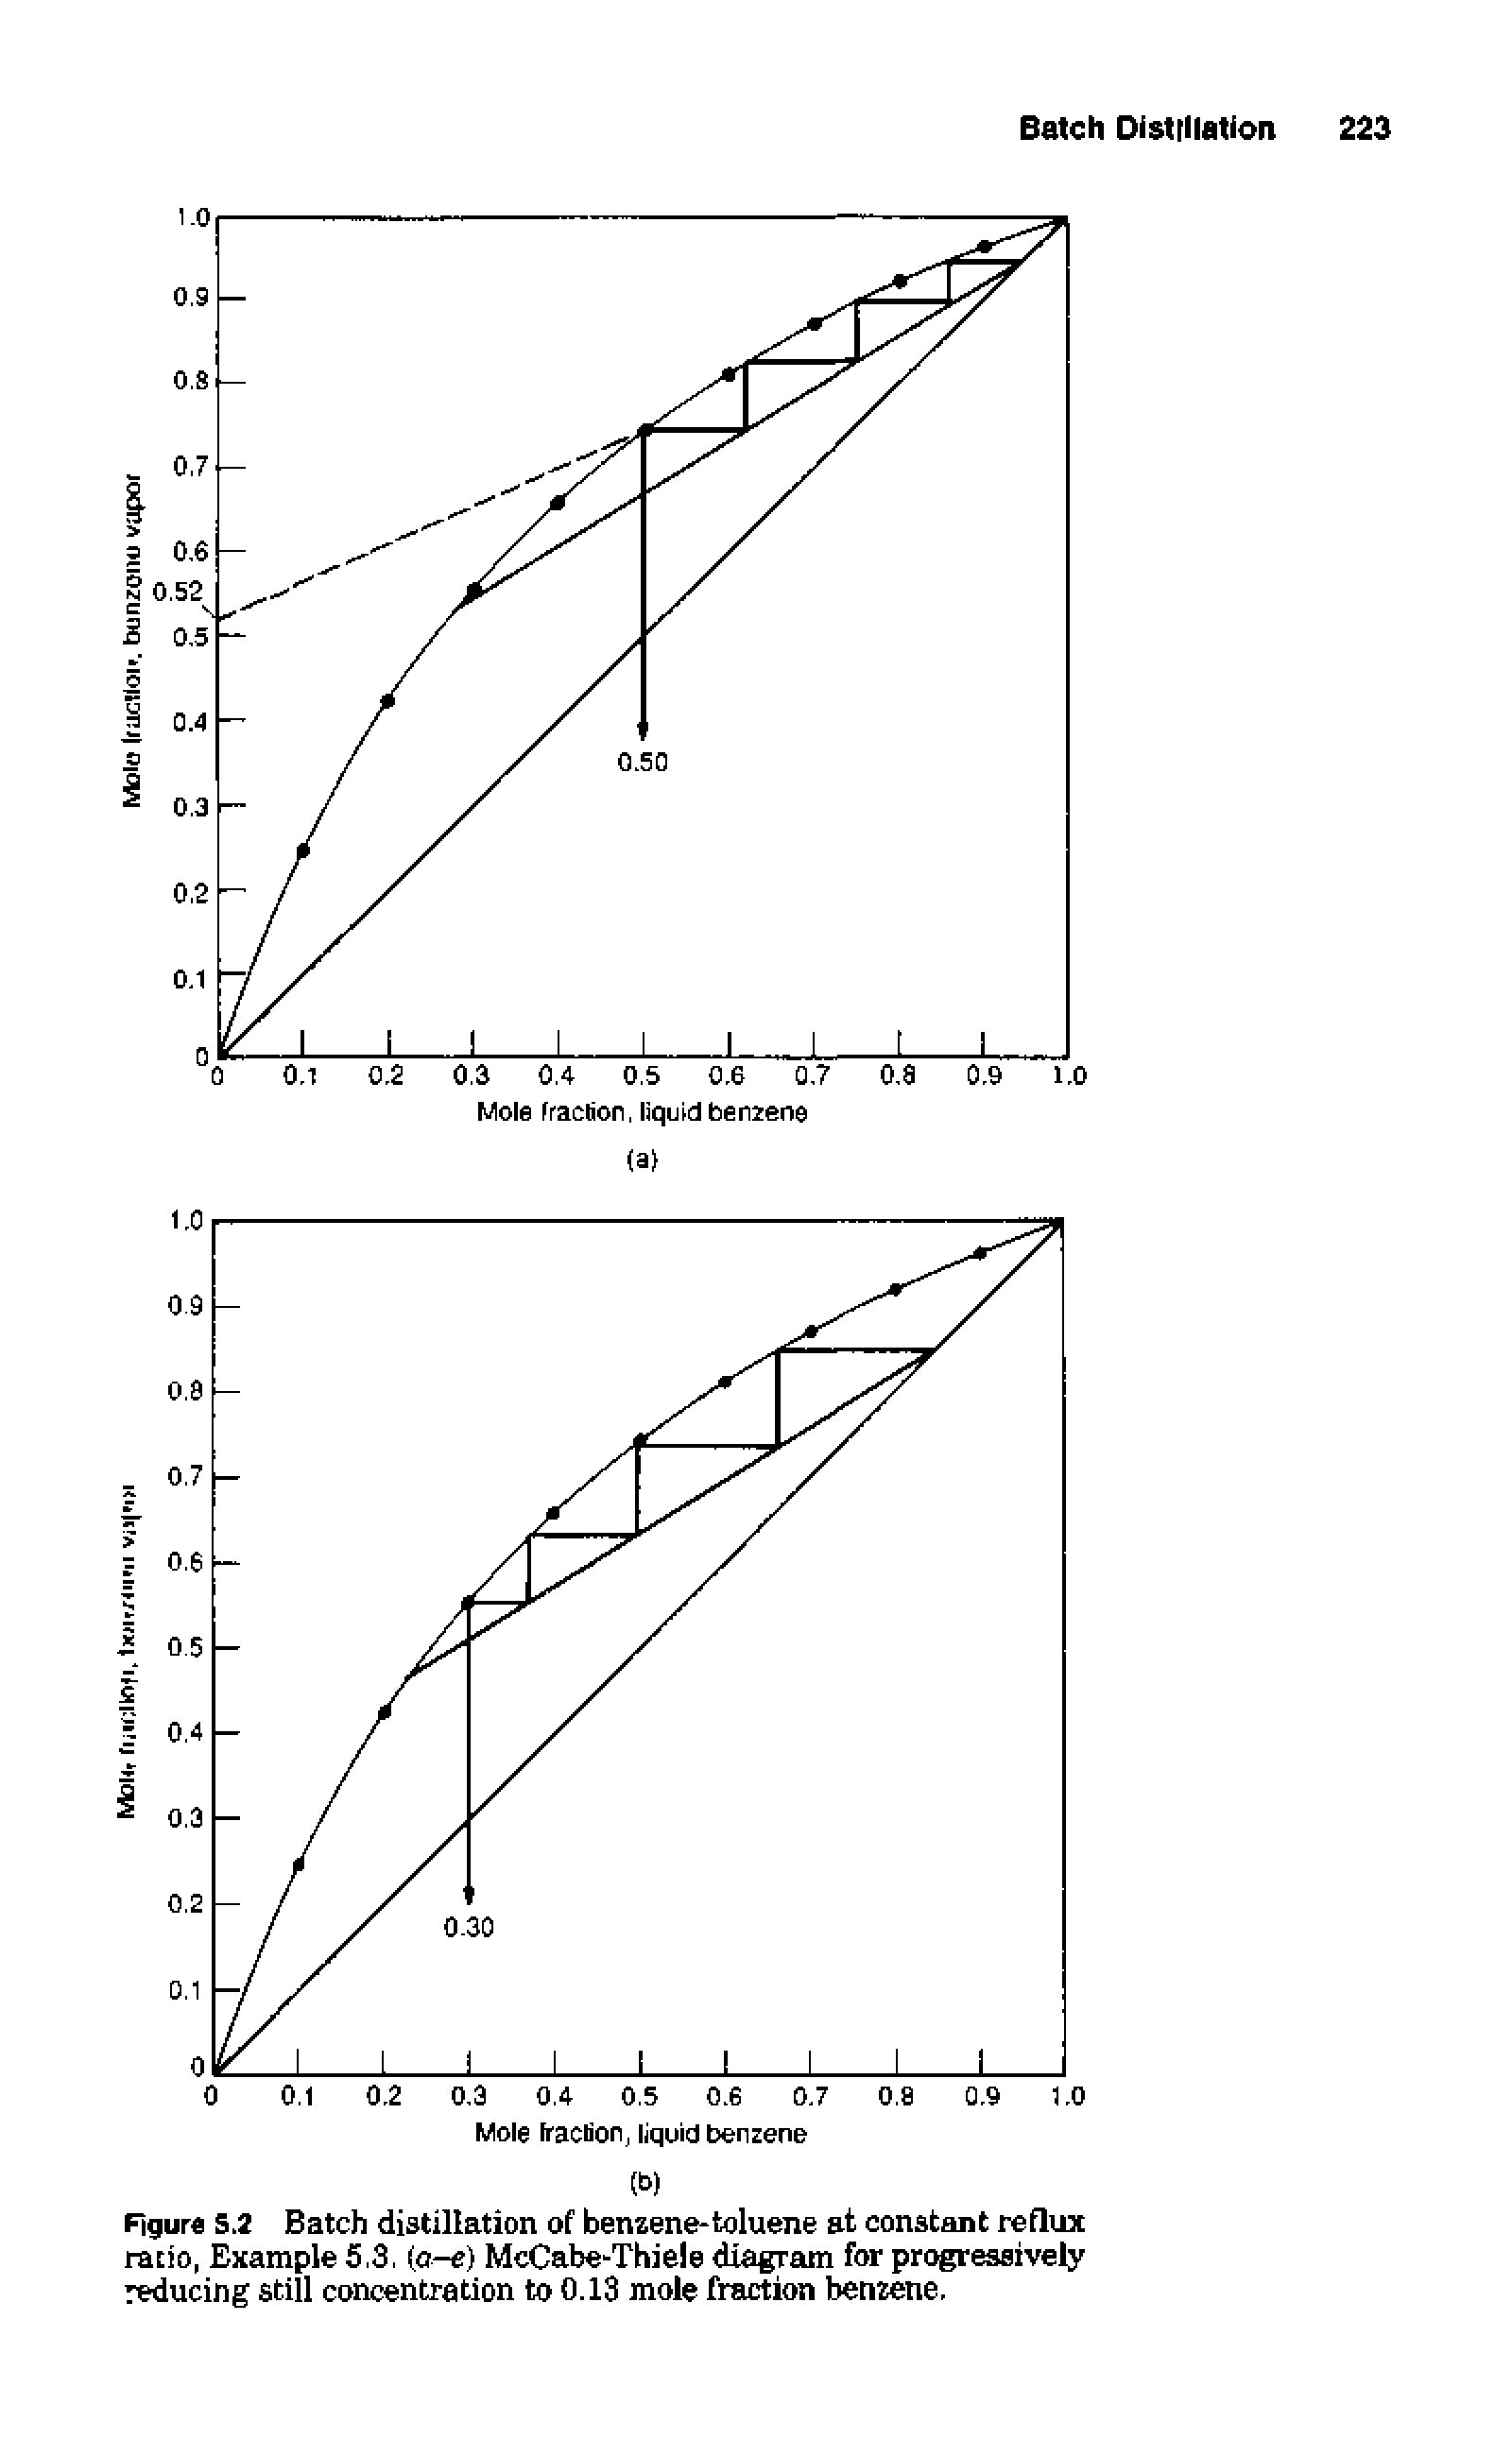 Figure S.2 Batch distillation of benzene-toluene at constant reflux ratio, Example 5,3, ia-e) McCabe-Thiele diagram for progressively reducing still concentration to 0.13 mole fraction benzene.